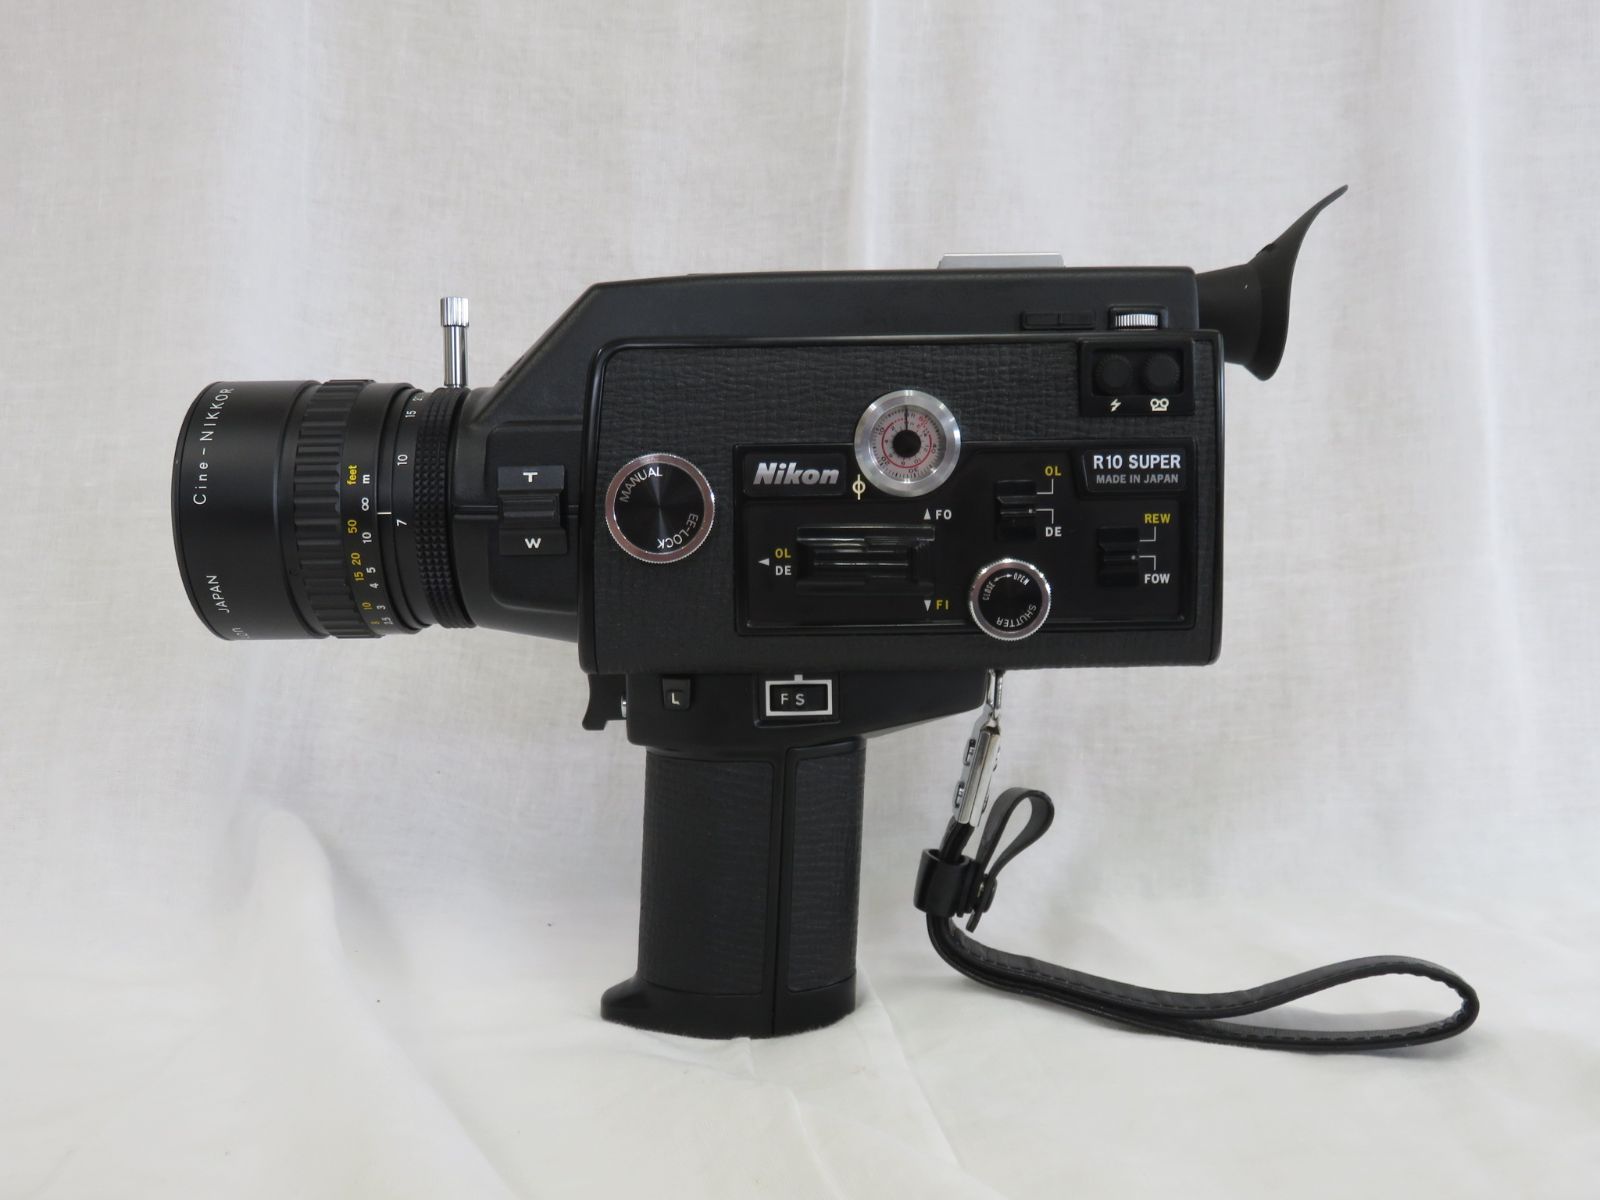 Nikon R10 Super 8mm カメラ  ジャンク品